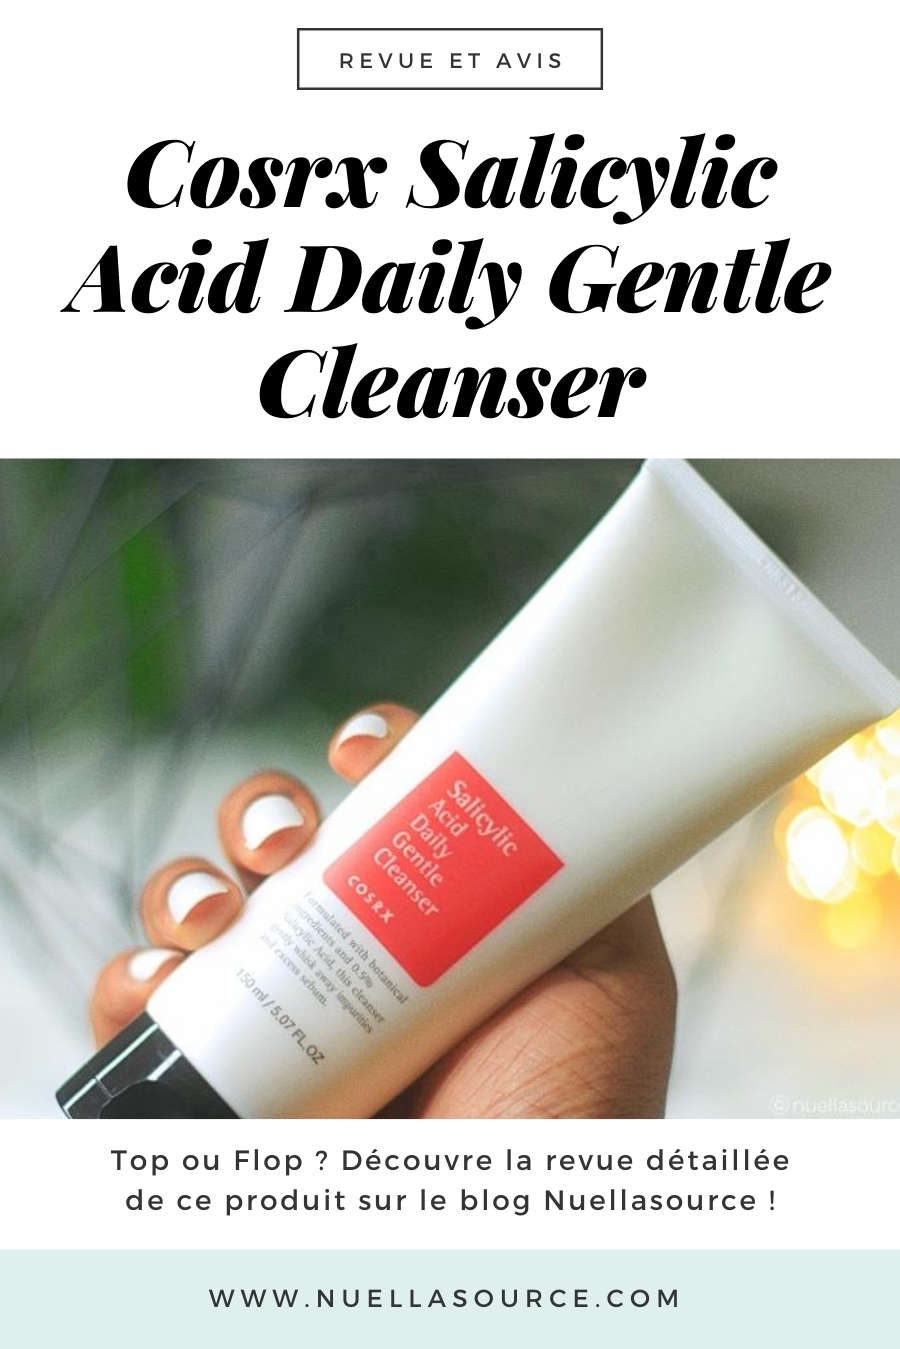 Revue avis cosrx salicylic acid daily gentle cleanser nuellasource